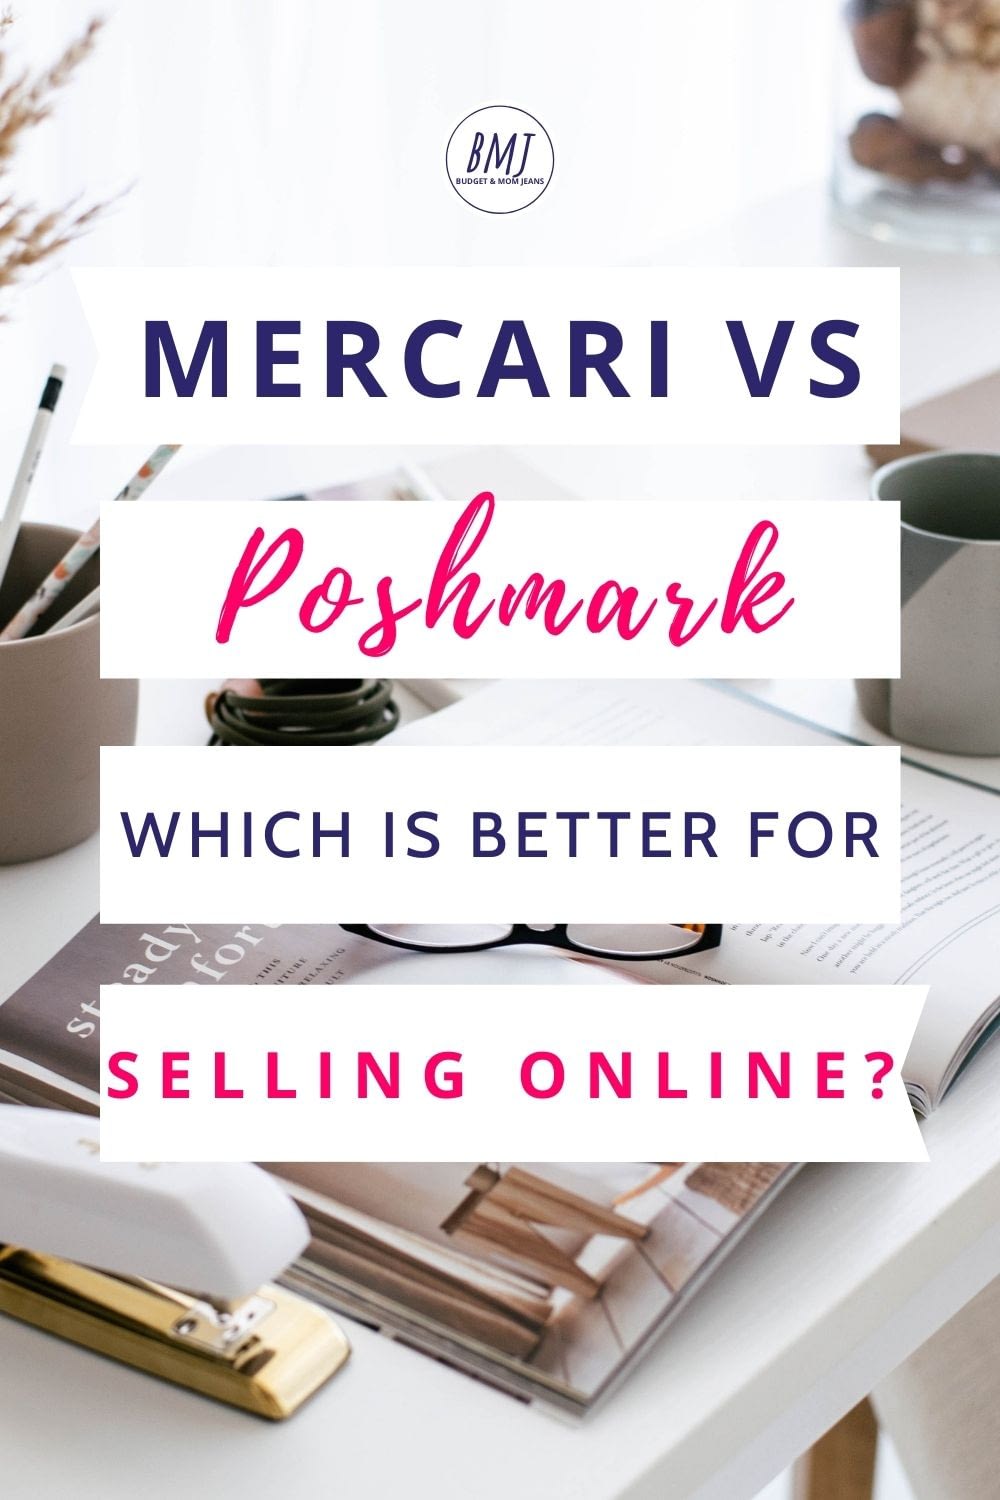 Mercari VS Poshmark Which Is Better For Selling Online?